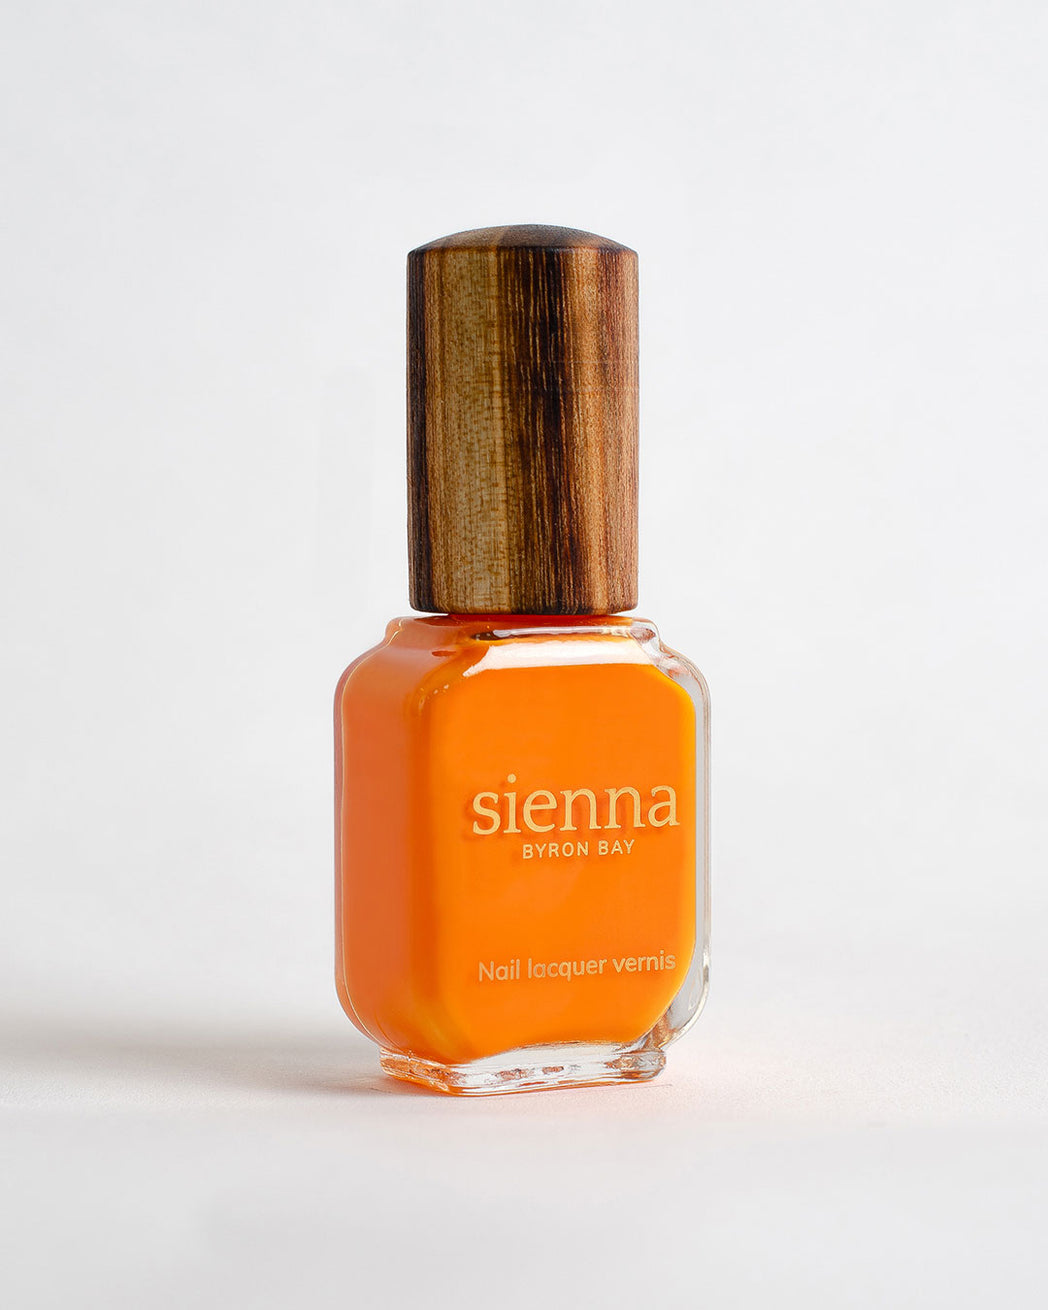 Bright papaya Orange nail polish bottle with timber cap by Sienna Byron Bay